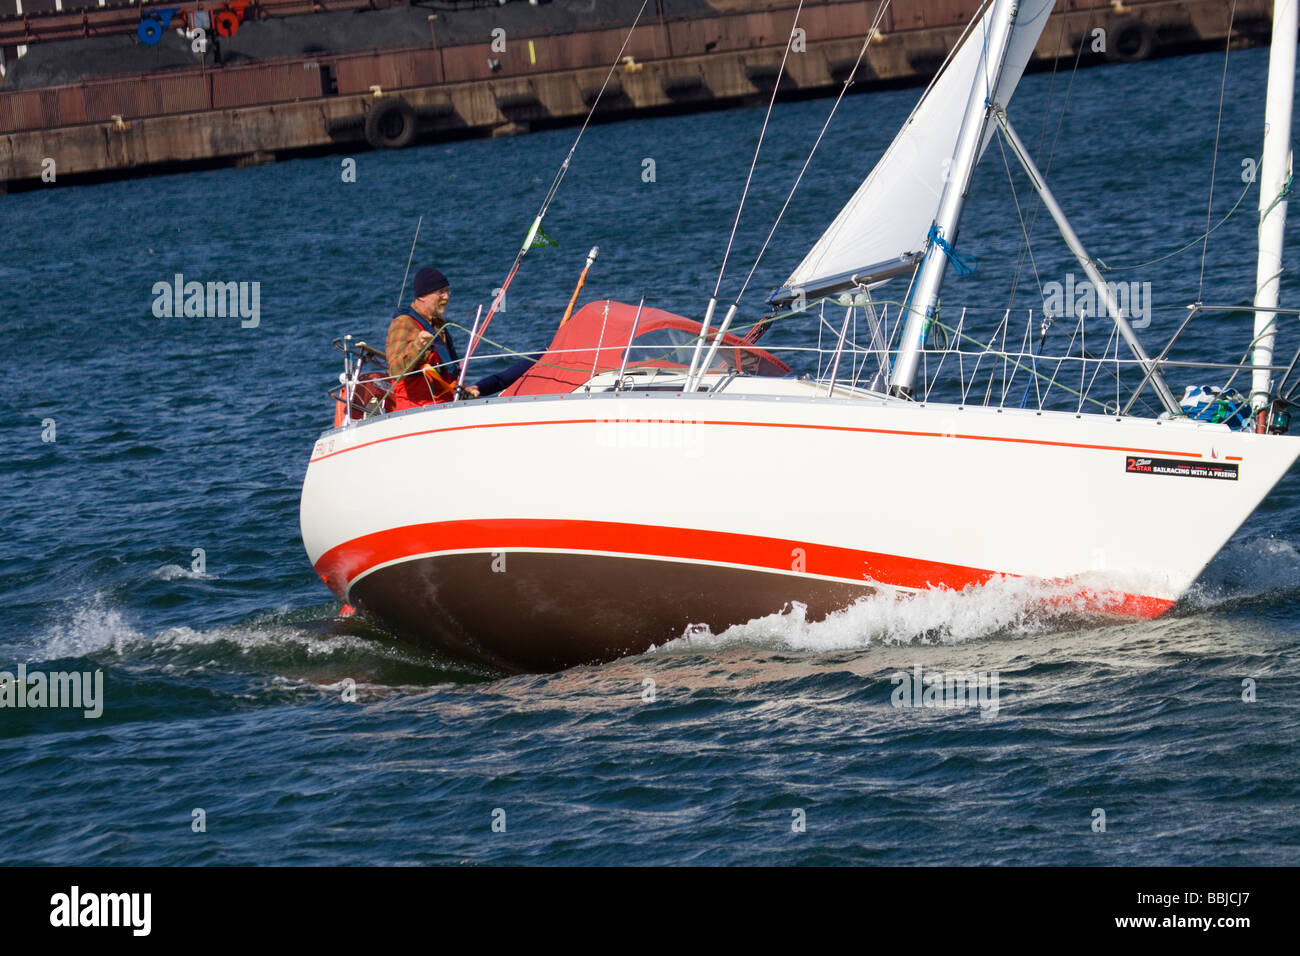 Sailing boat on raceday Stock Photo